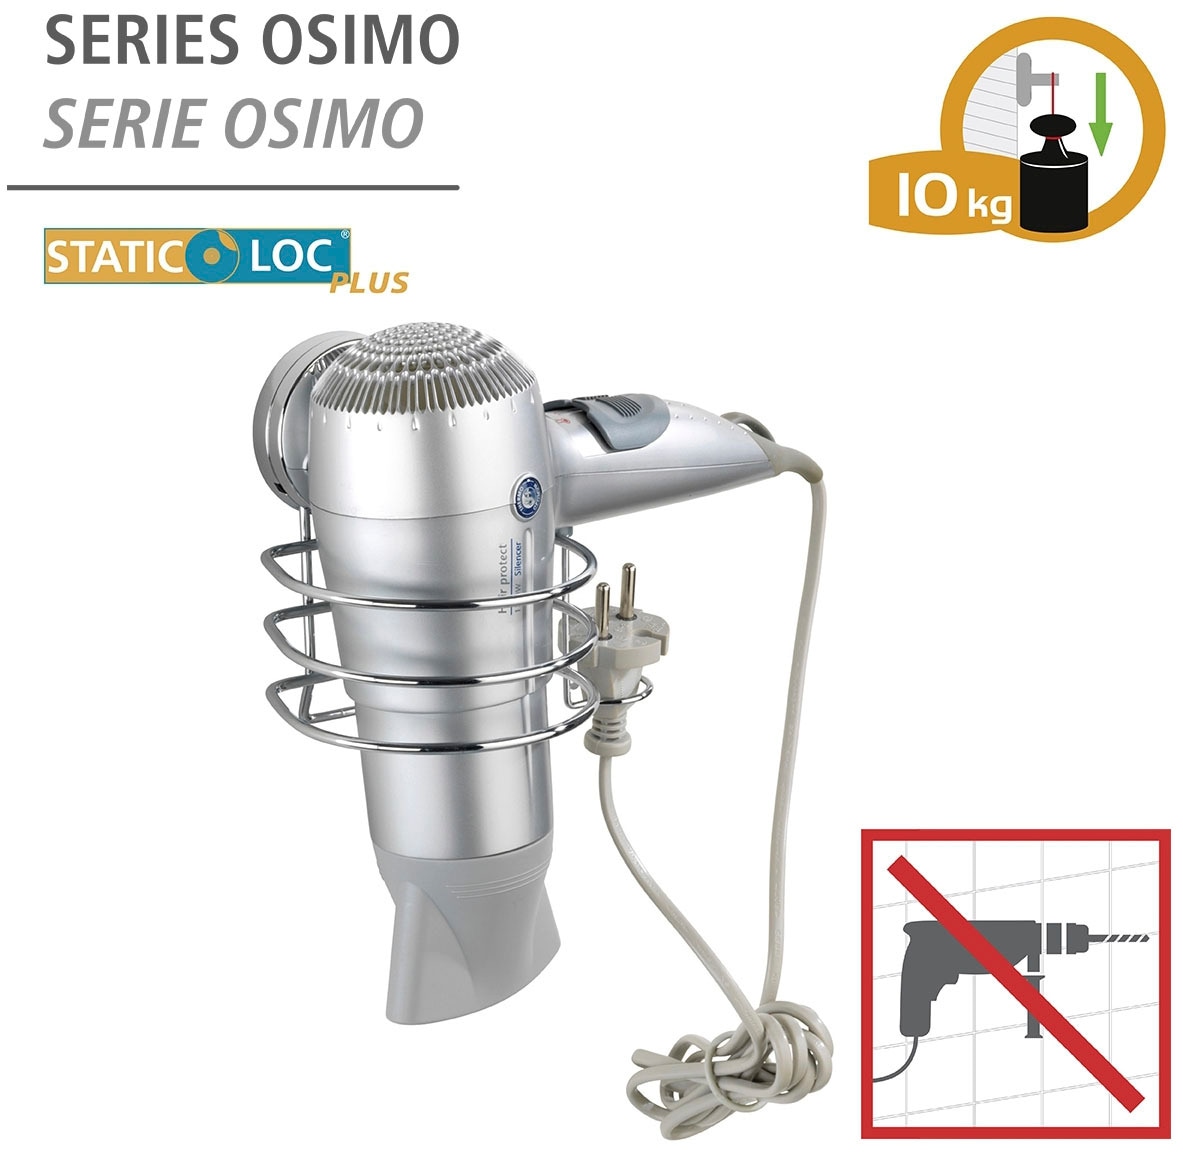 WENKO Haartrocknerhalter »Static-Loc® Plus Osimo«, Befestigen ohne Bohren  bei OTTO